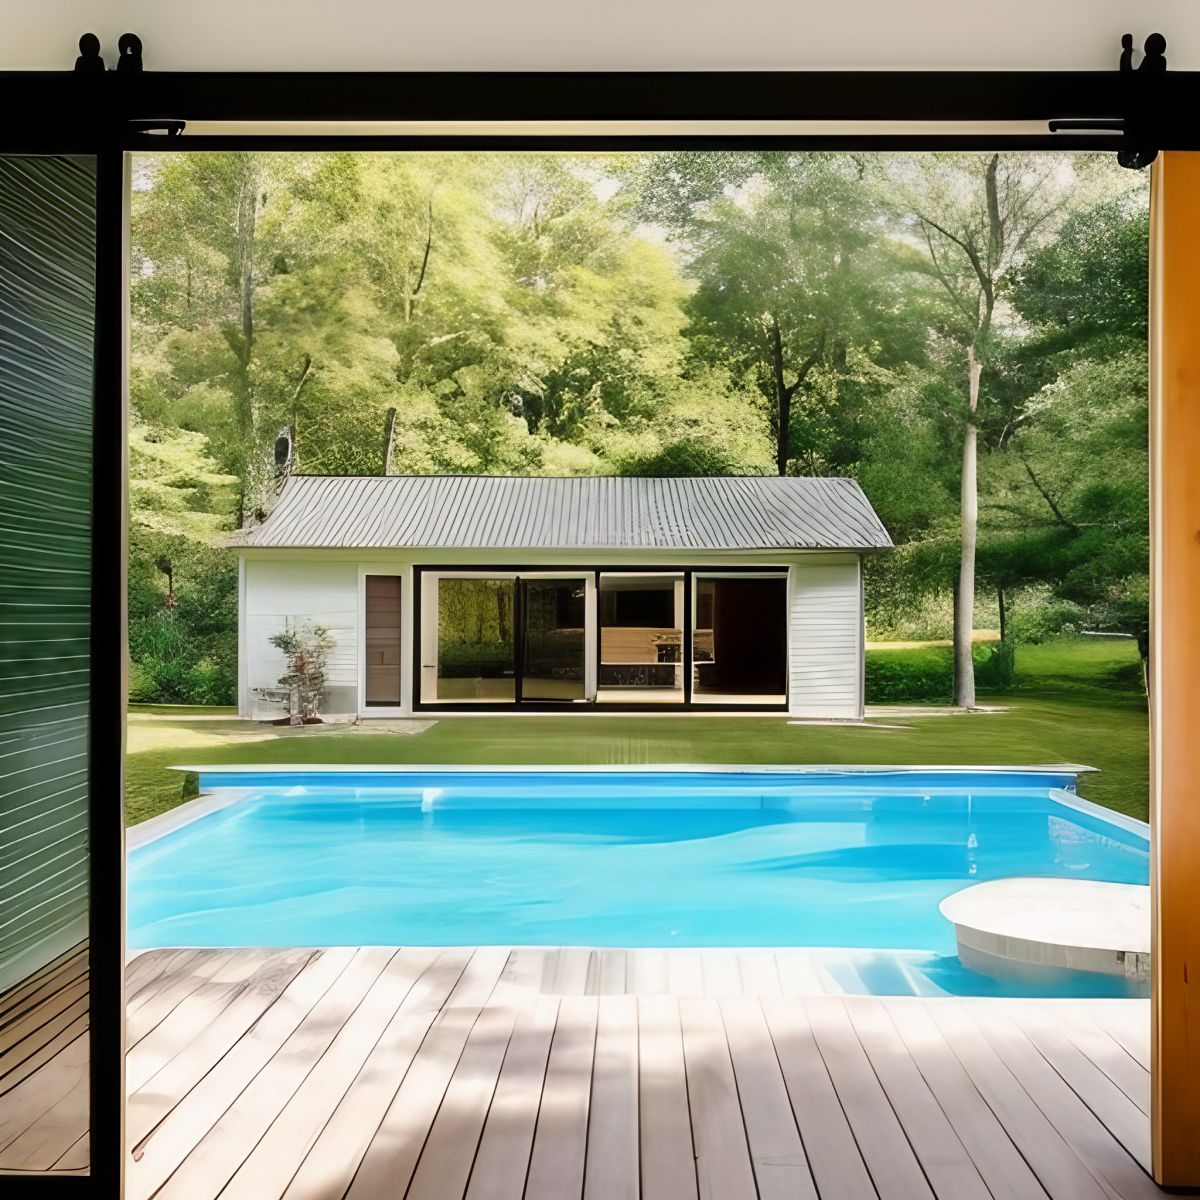 Sliding barn door opens up to swimming pool in backyard